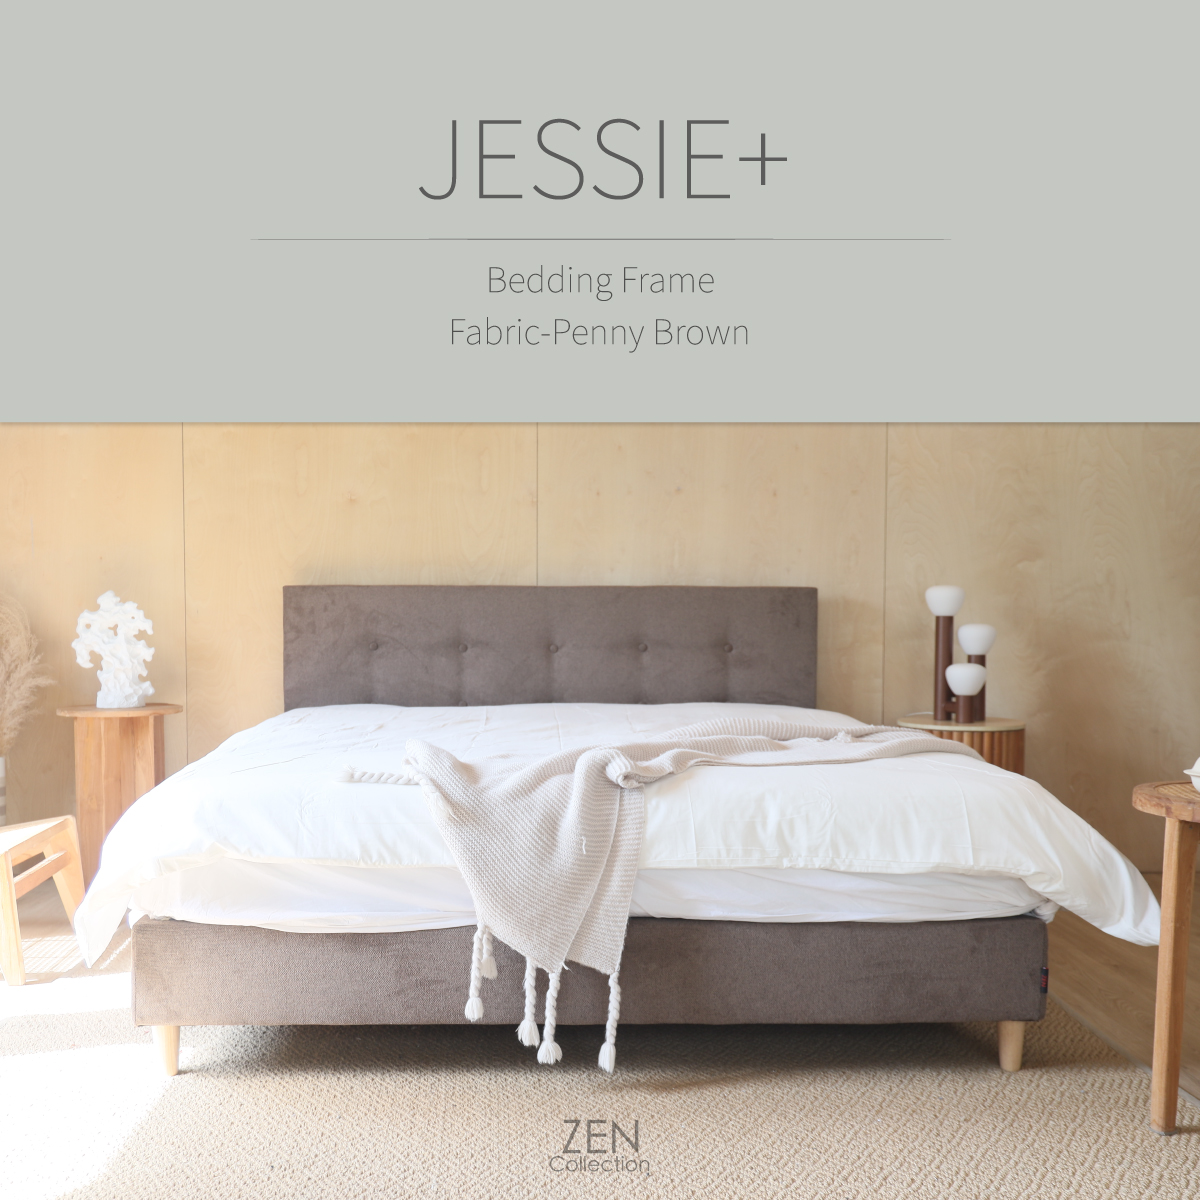 Zen Collection Jessie Plus Bedding Frame 36 ฟุต Penny Brown บริษัท อินเตอร์ วูด มาร์เก็ตติ้ง 